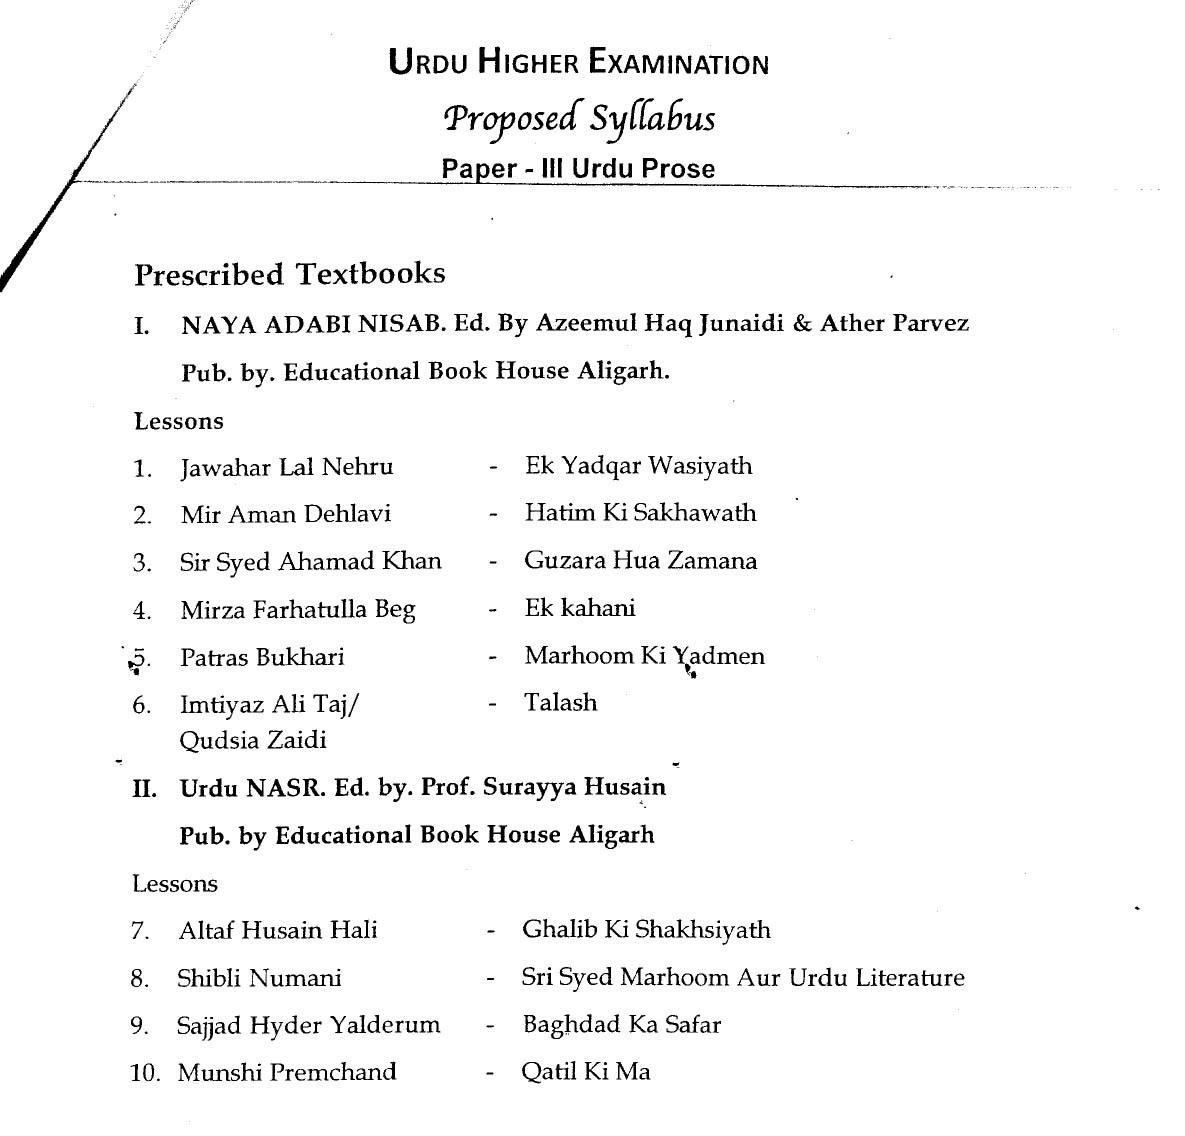 KTET Exam Syllabus for Urdu Teacher Examination of The Year 2013 5